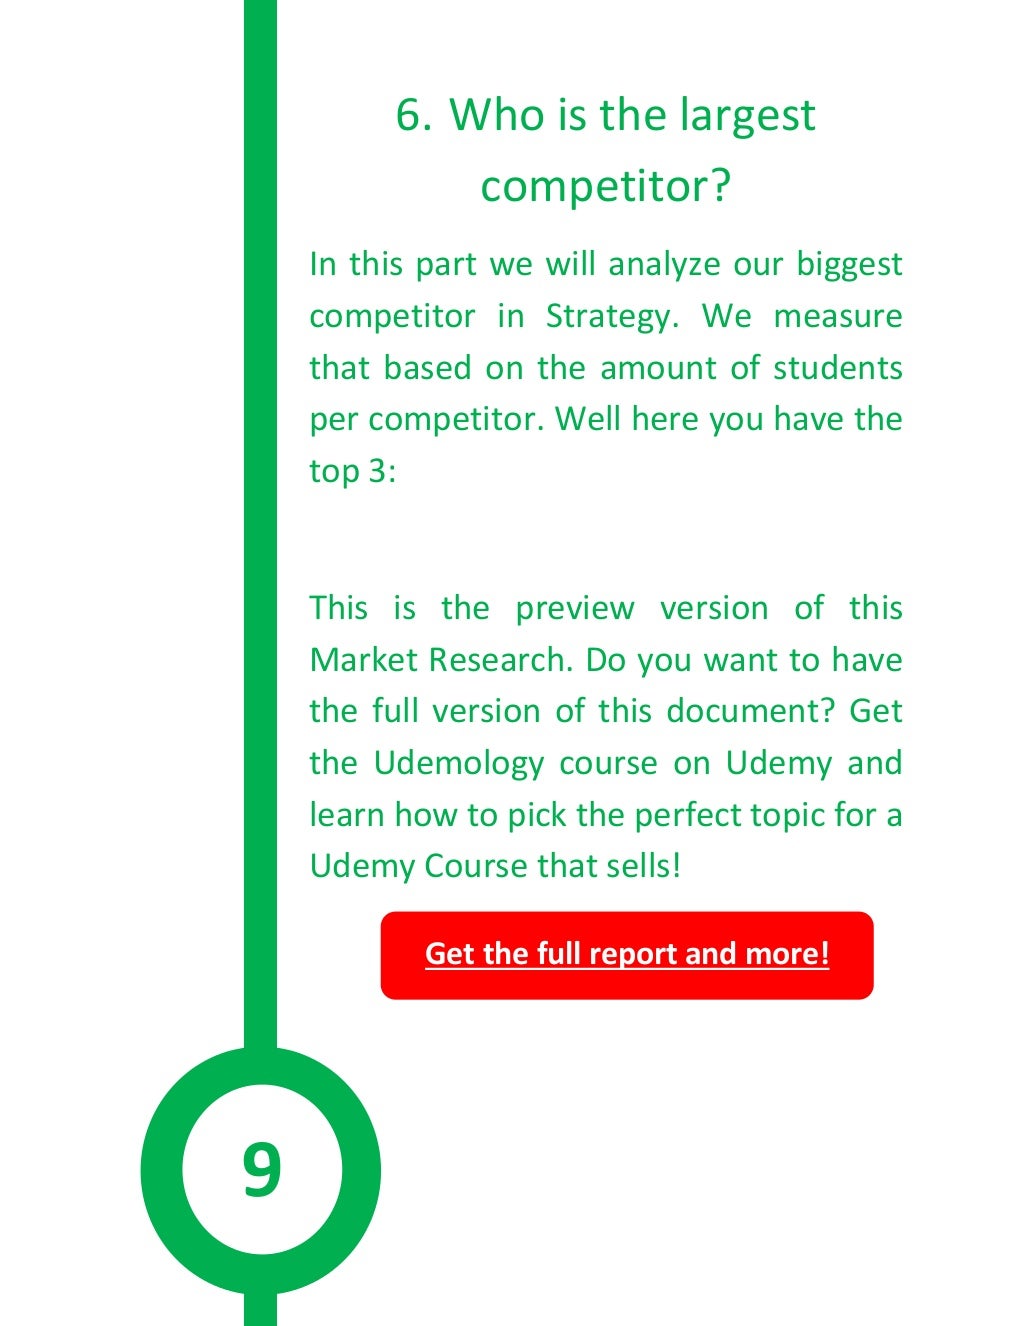 Udemy Market Research Strategy by Udemology